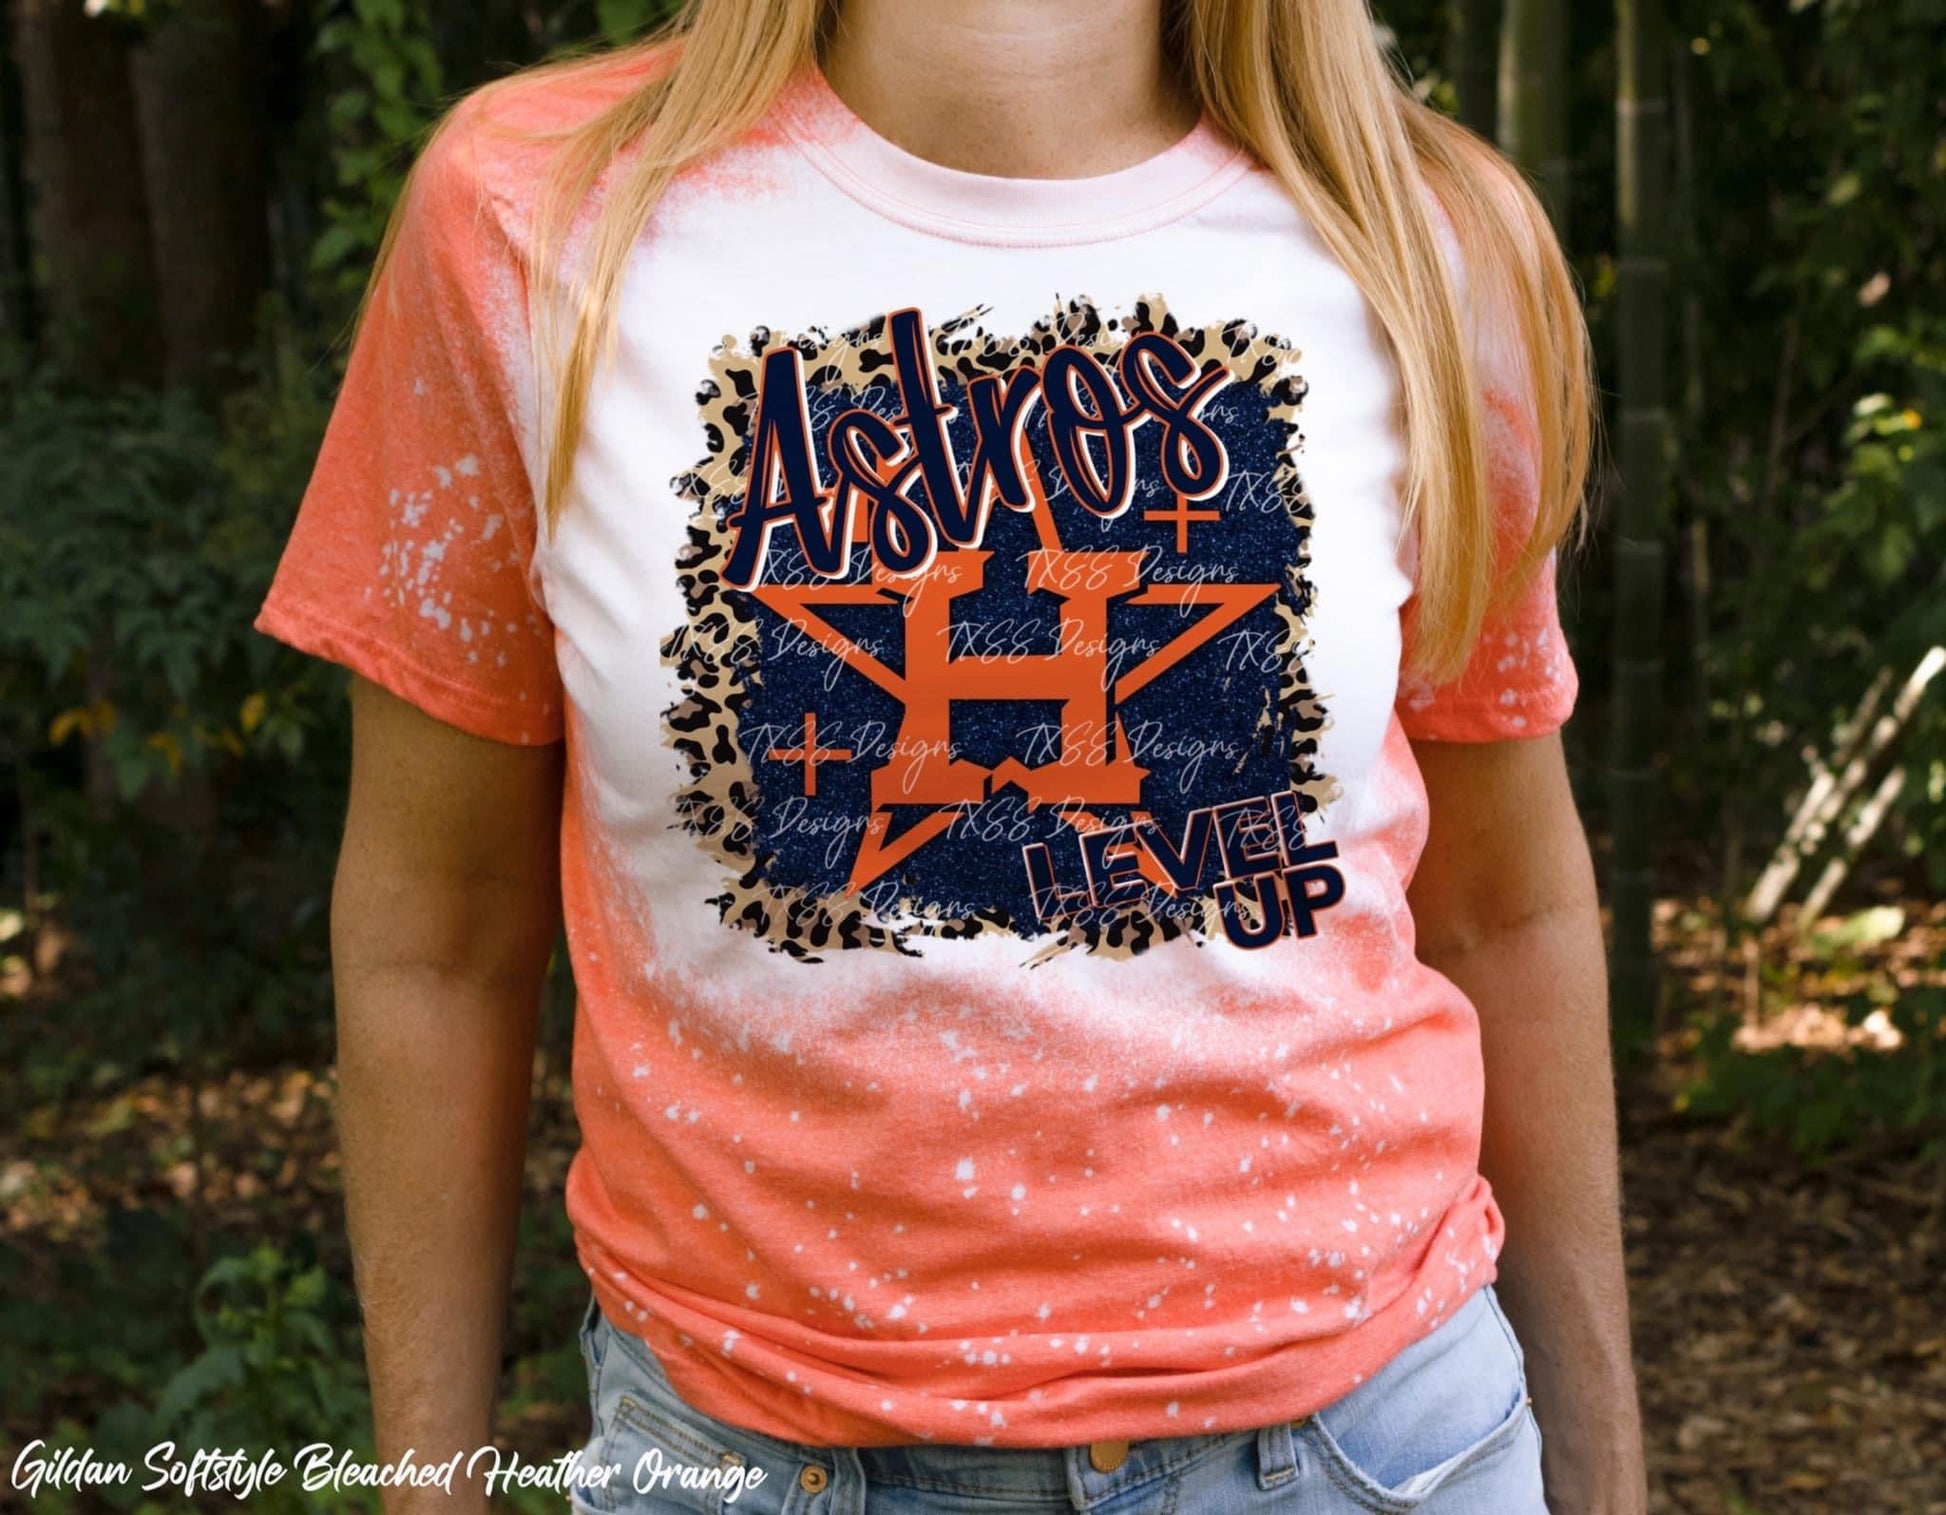 Houston Astros T-Shirts, Astros T-Shirts